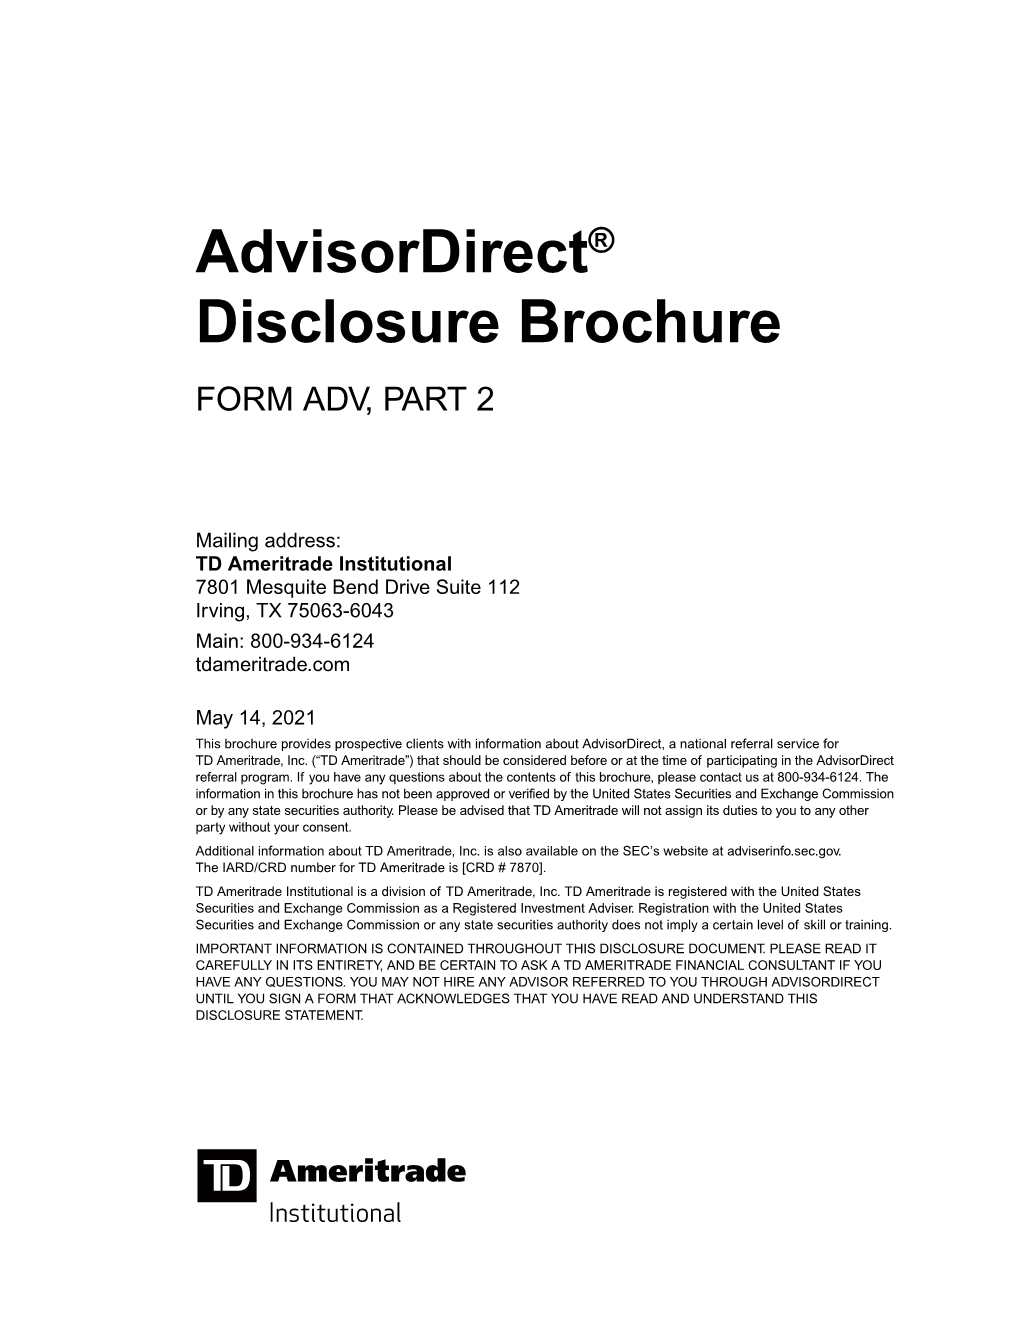 Advisordirect Disclosure Brochure Form ADV, Part 2-TDI 0521